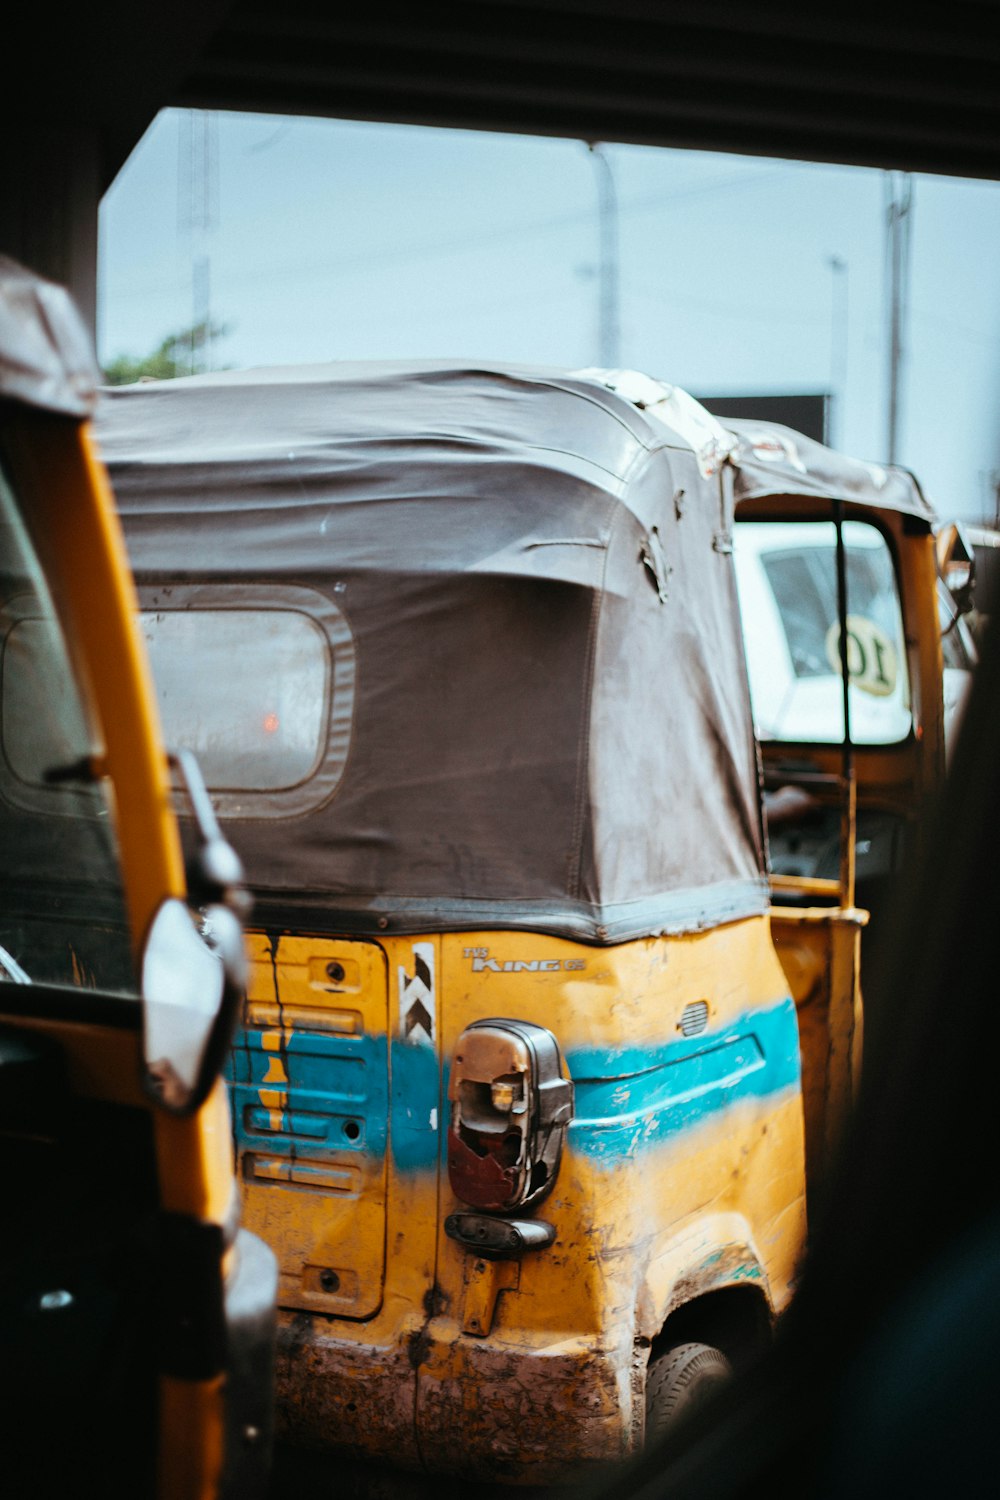 yellow auto-rickshaw